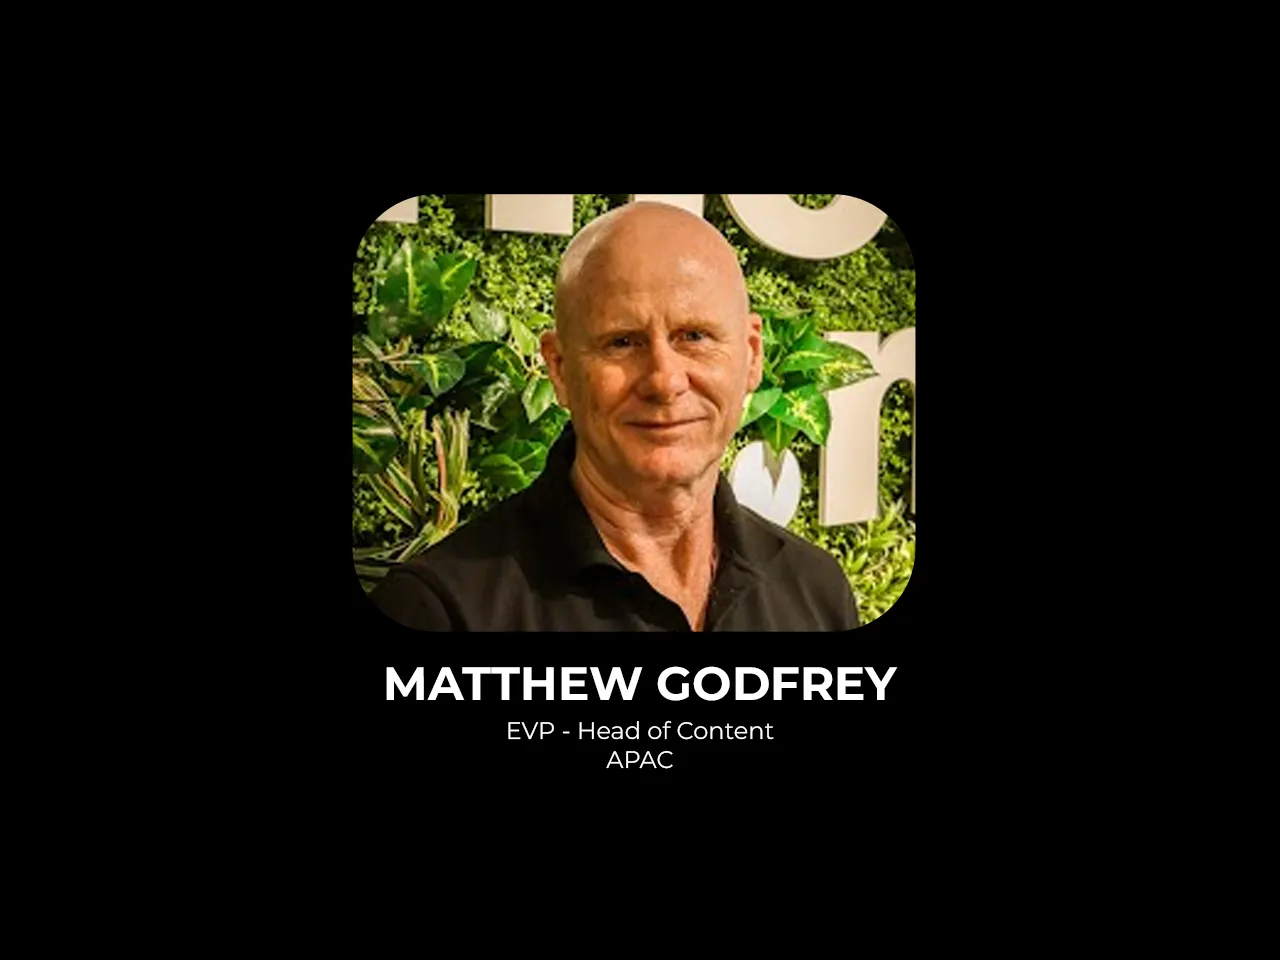 Matthew Godfrey